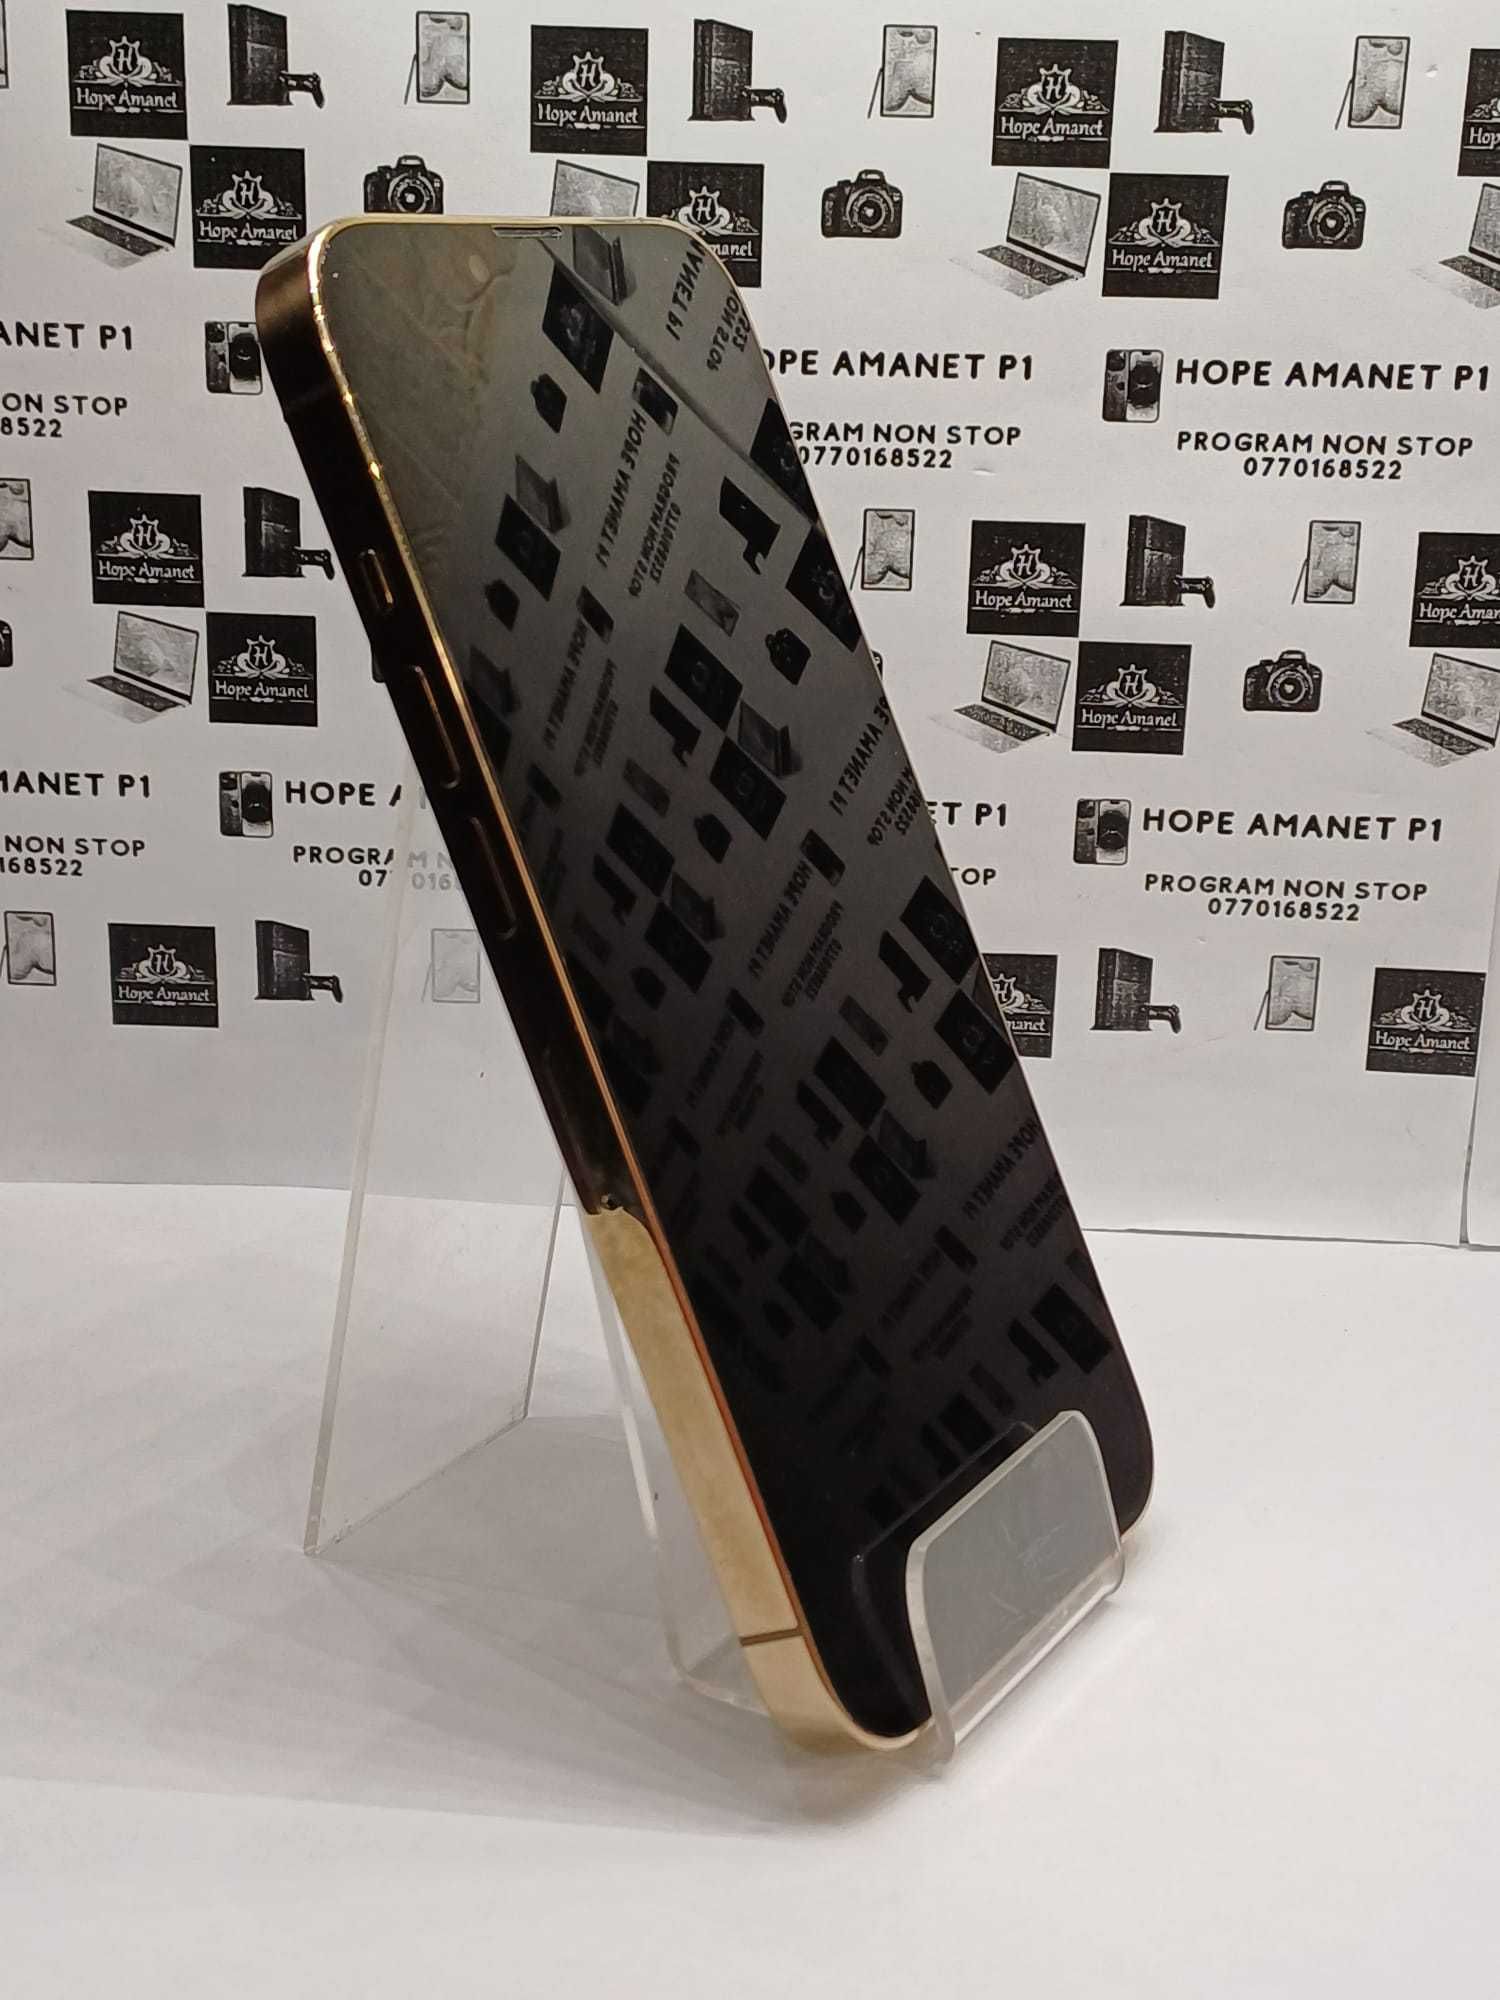 Hope Amanet P1/Iphone 13 Pro 128GB Gold